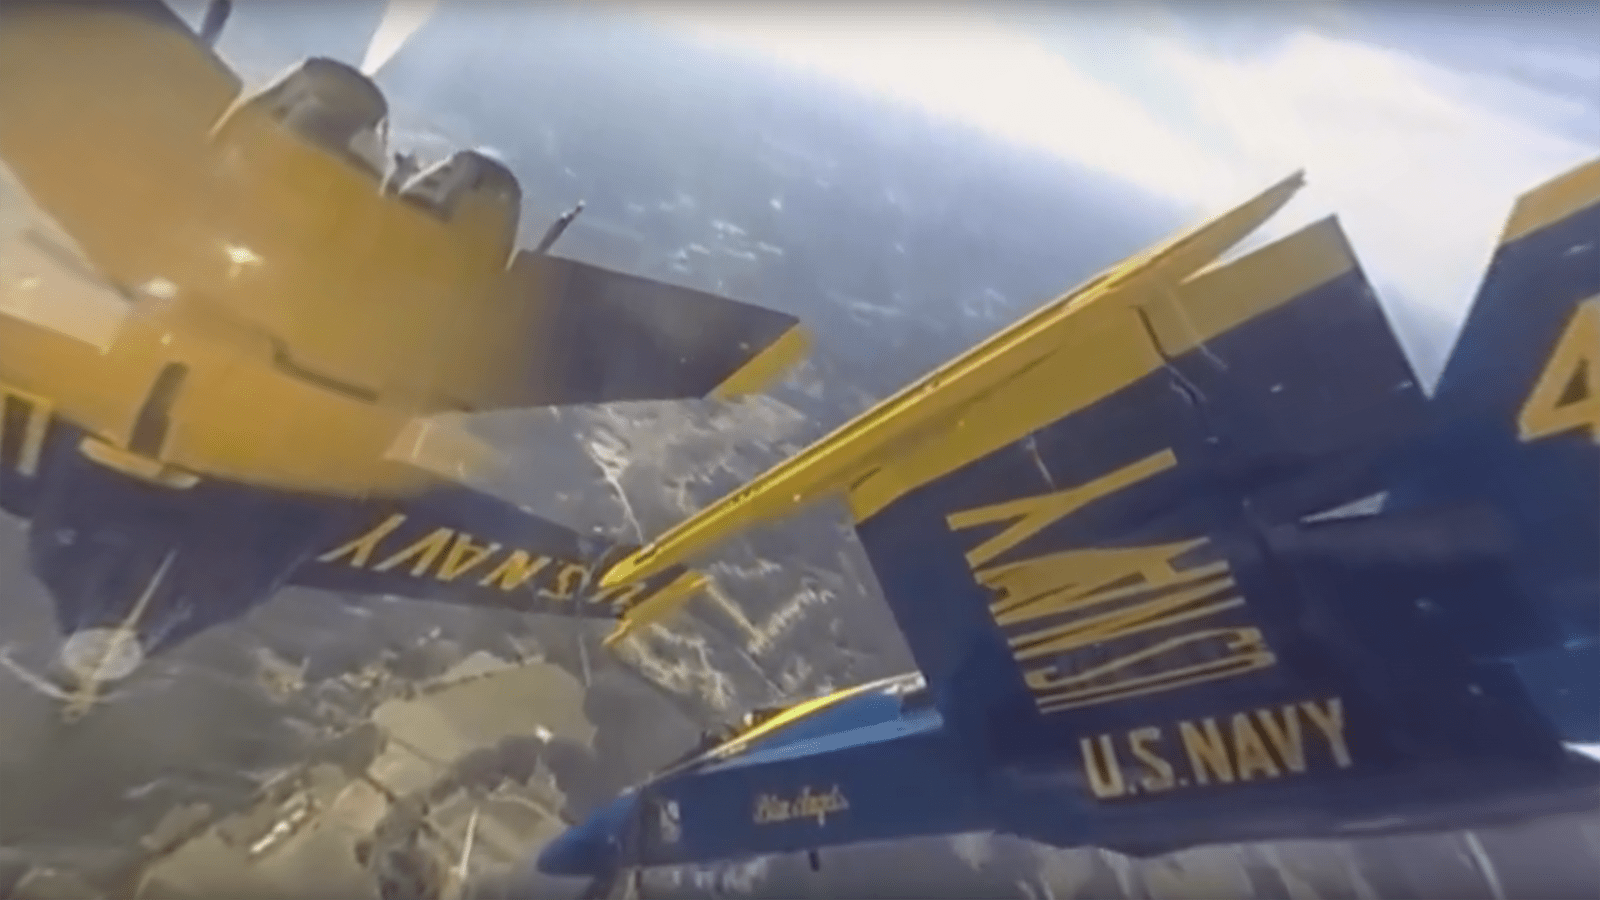 U.S Navy Blue Angels Insane Cockpit Footage